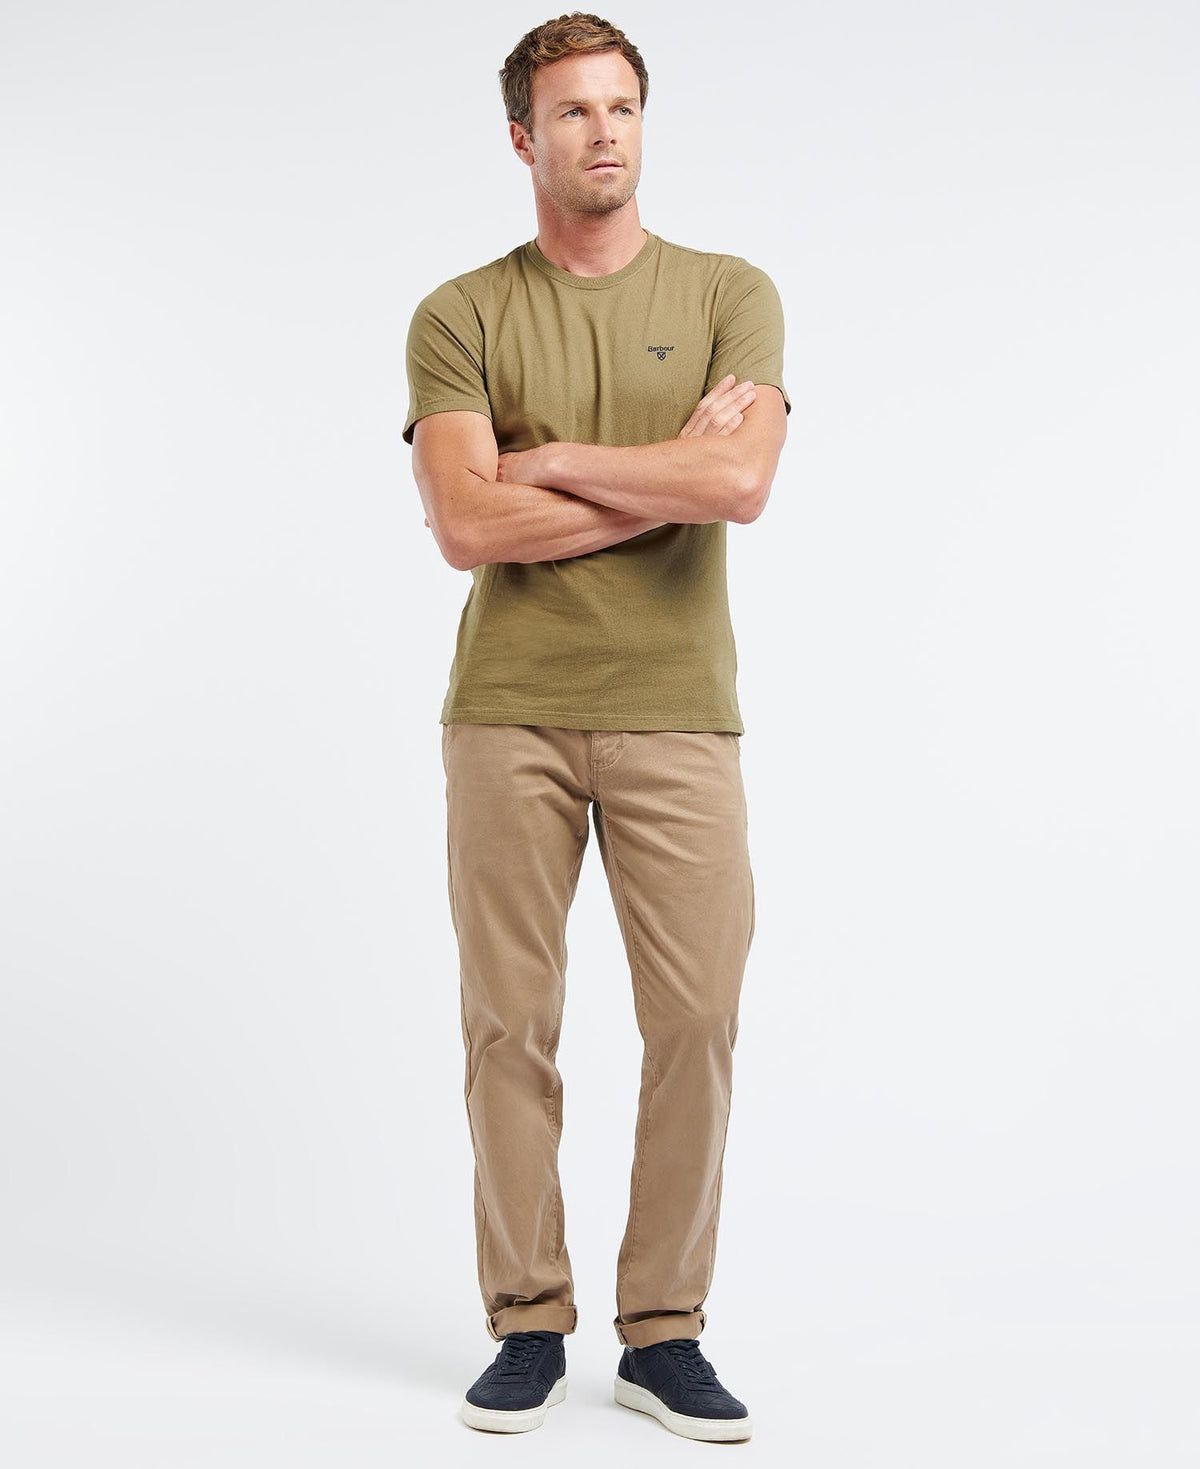 Barbour Men's Sports T-Shirt - Short Sleeved, 03, Mts0331, Mid Olive